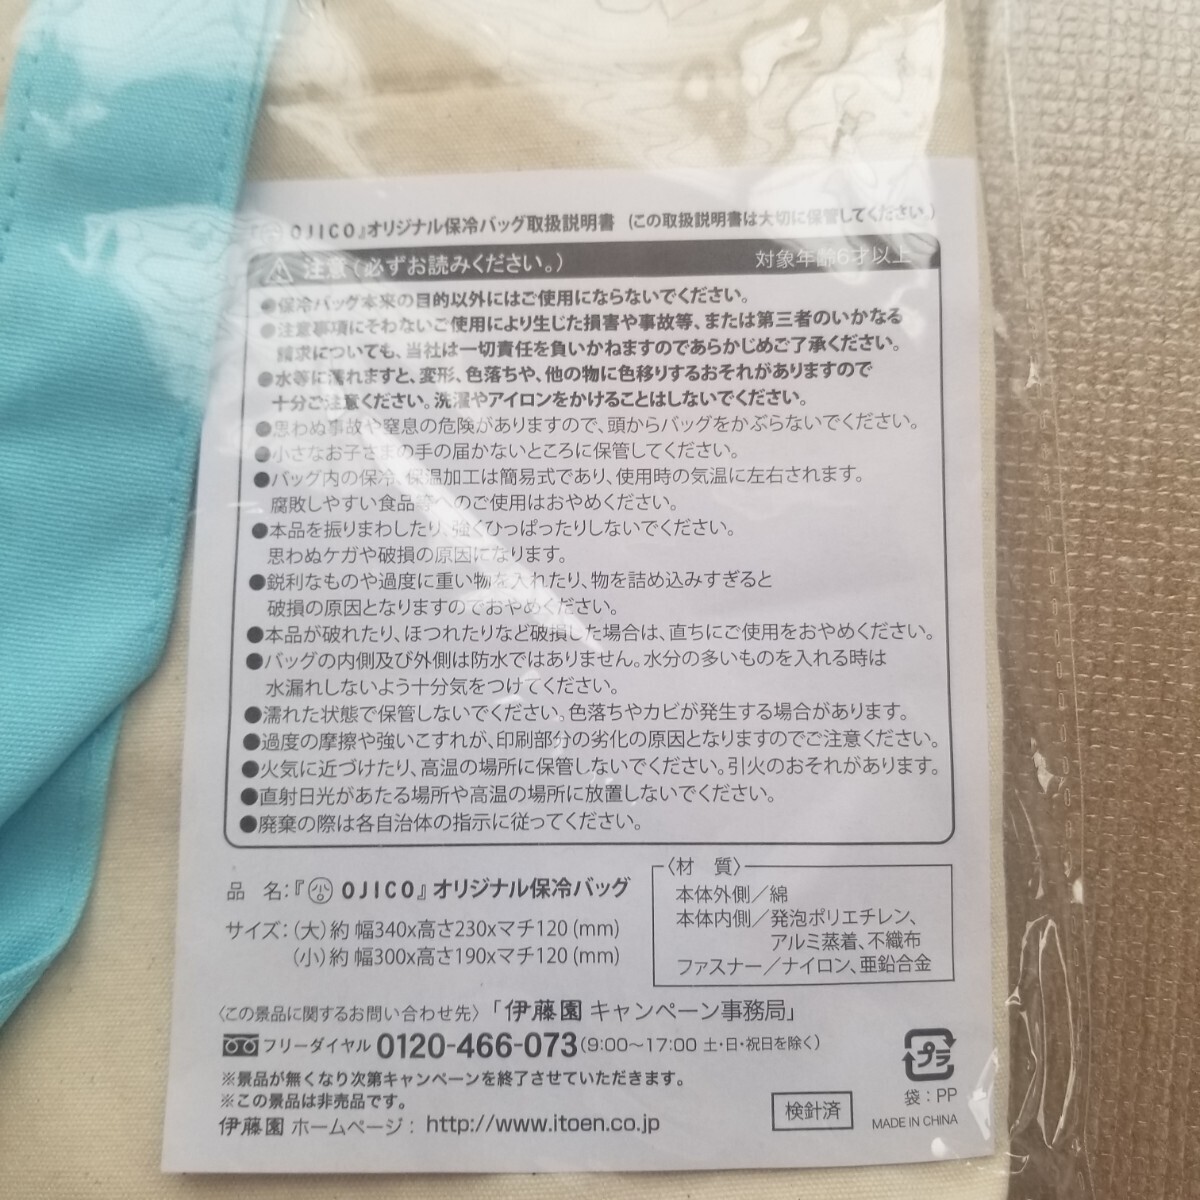  OJICO オリジナル 保冷バッグ 伊藤園 非売品 オジコ クーラーバック 電車_画像3